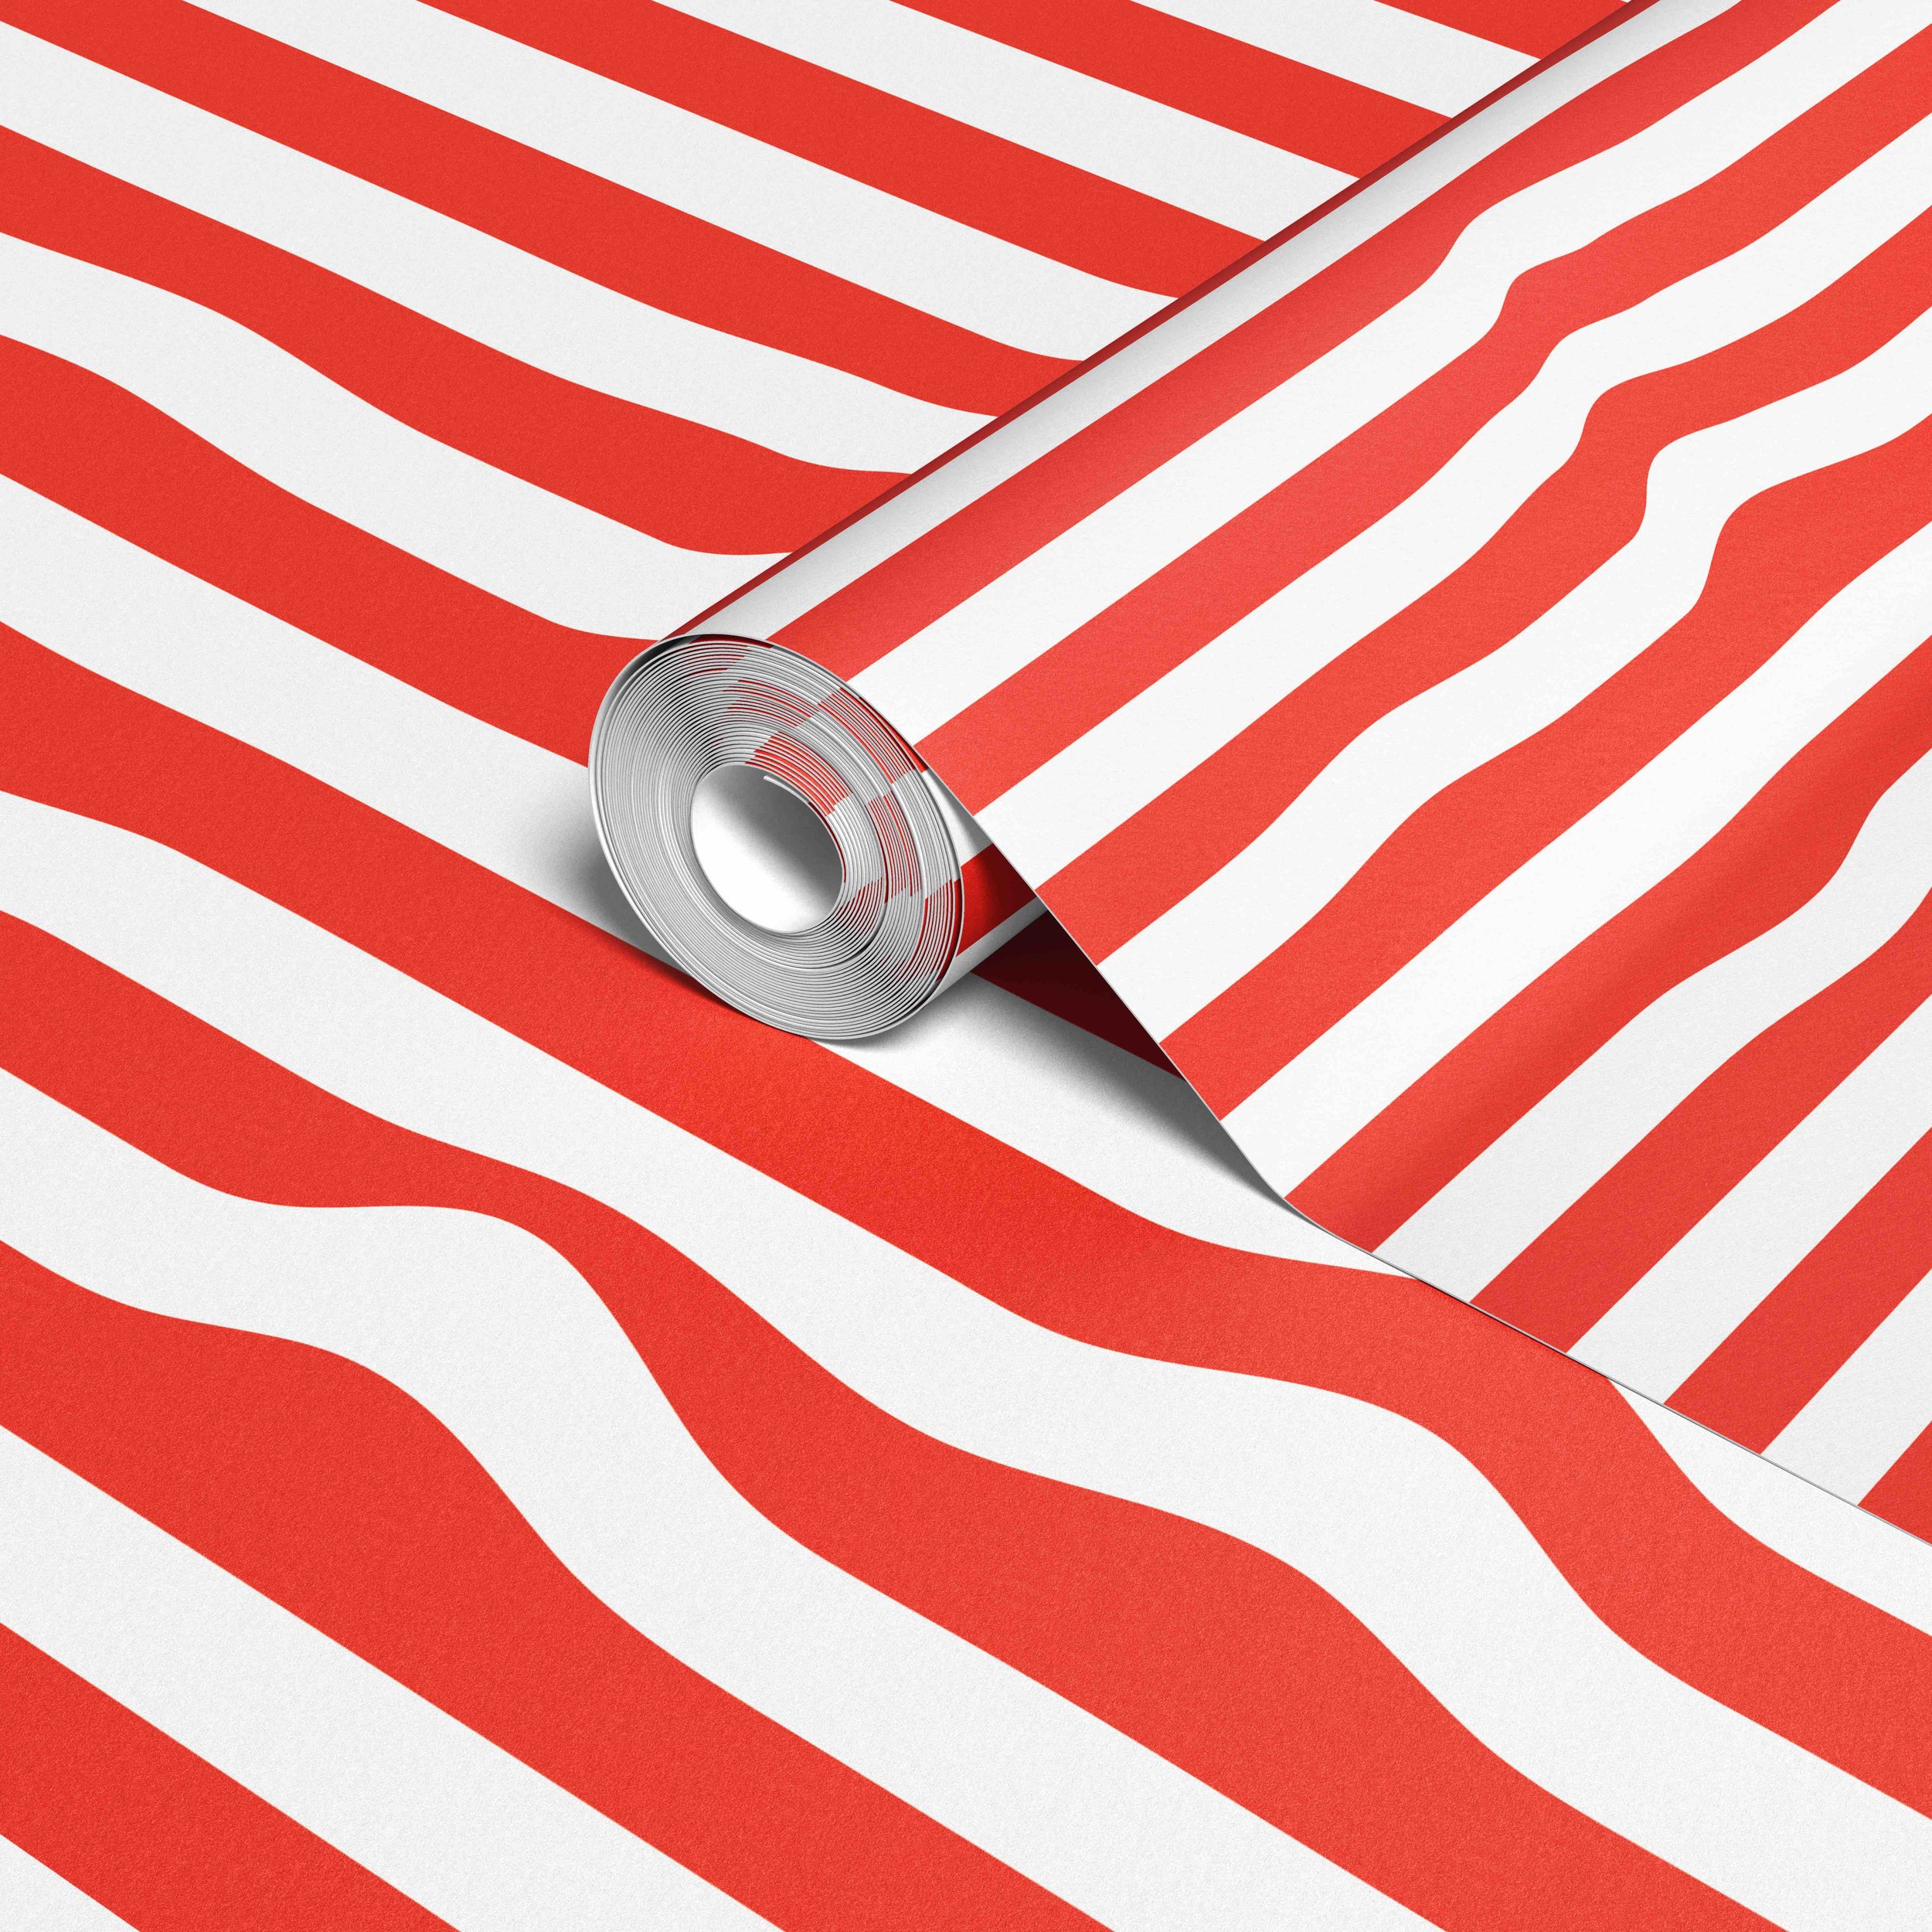 Warped Horizontal Stripe Wallpaper White Cherry Red.jpg